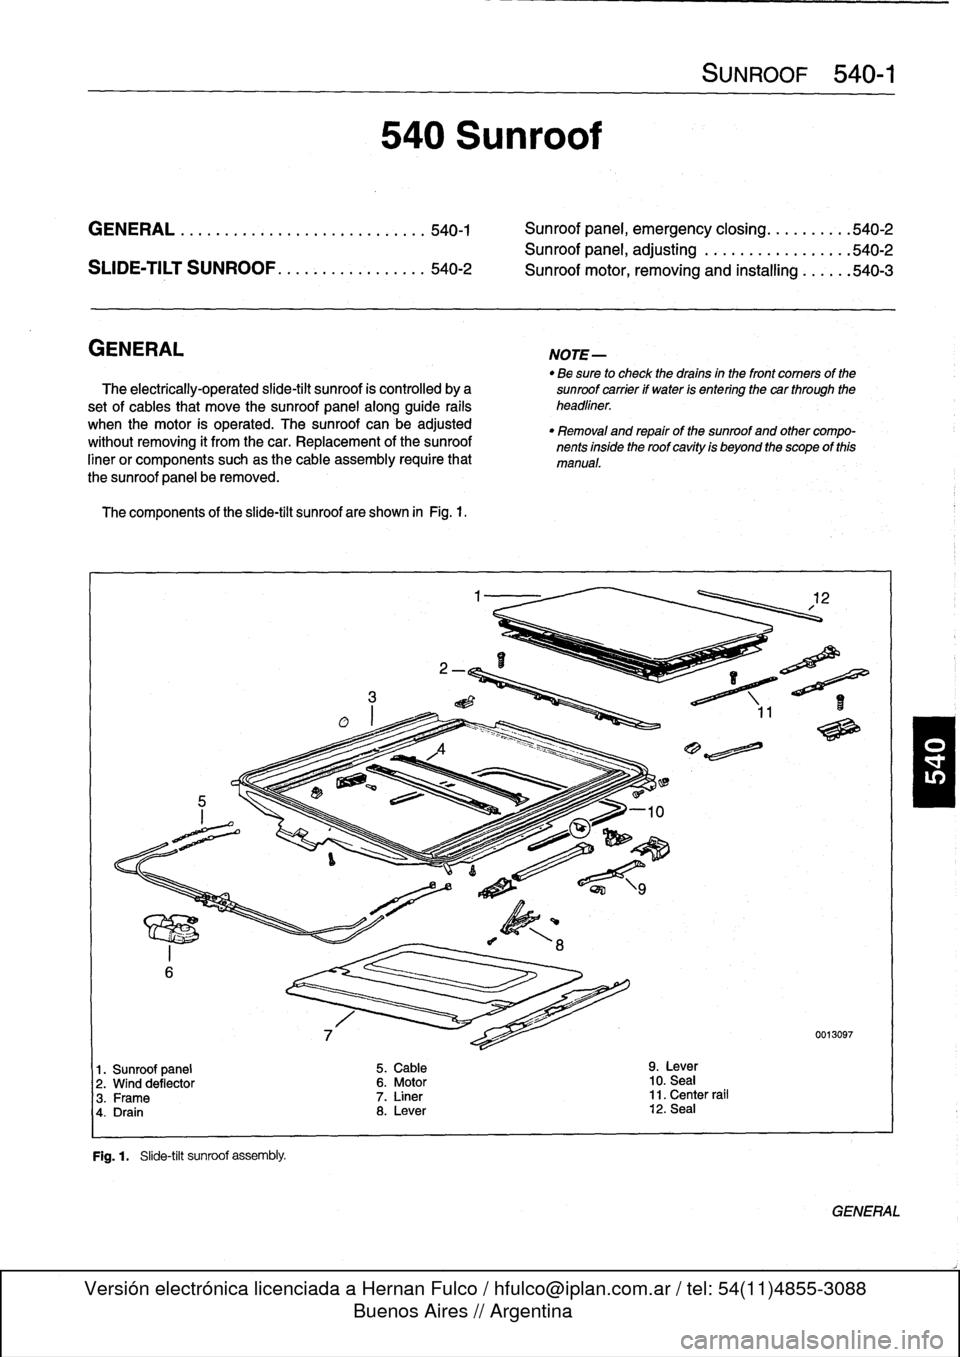 BMW 318i 1997 E36 Workshop Manual 
GENERAL
...
.
.
.
.
.
................
.
.
.
.
540-1

	

Sunroof
panel,
emergency
closing
.......
.
.
.540-2

Sunroof
panel,
adjusting
..
.
...........
.
.
.540-2

SUDE-TILT
SUNROOF
.
.
.
.
.
.
.
.
.